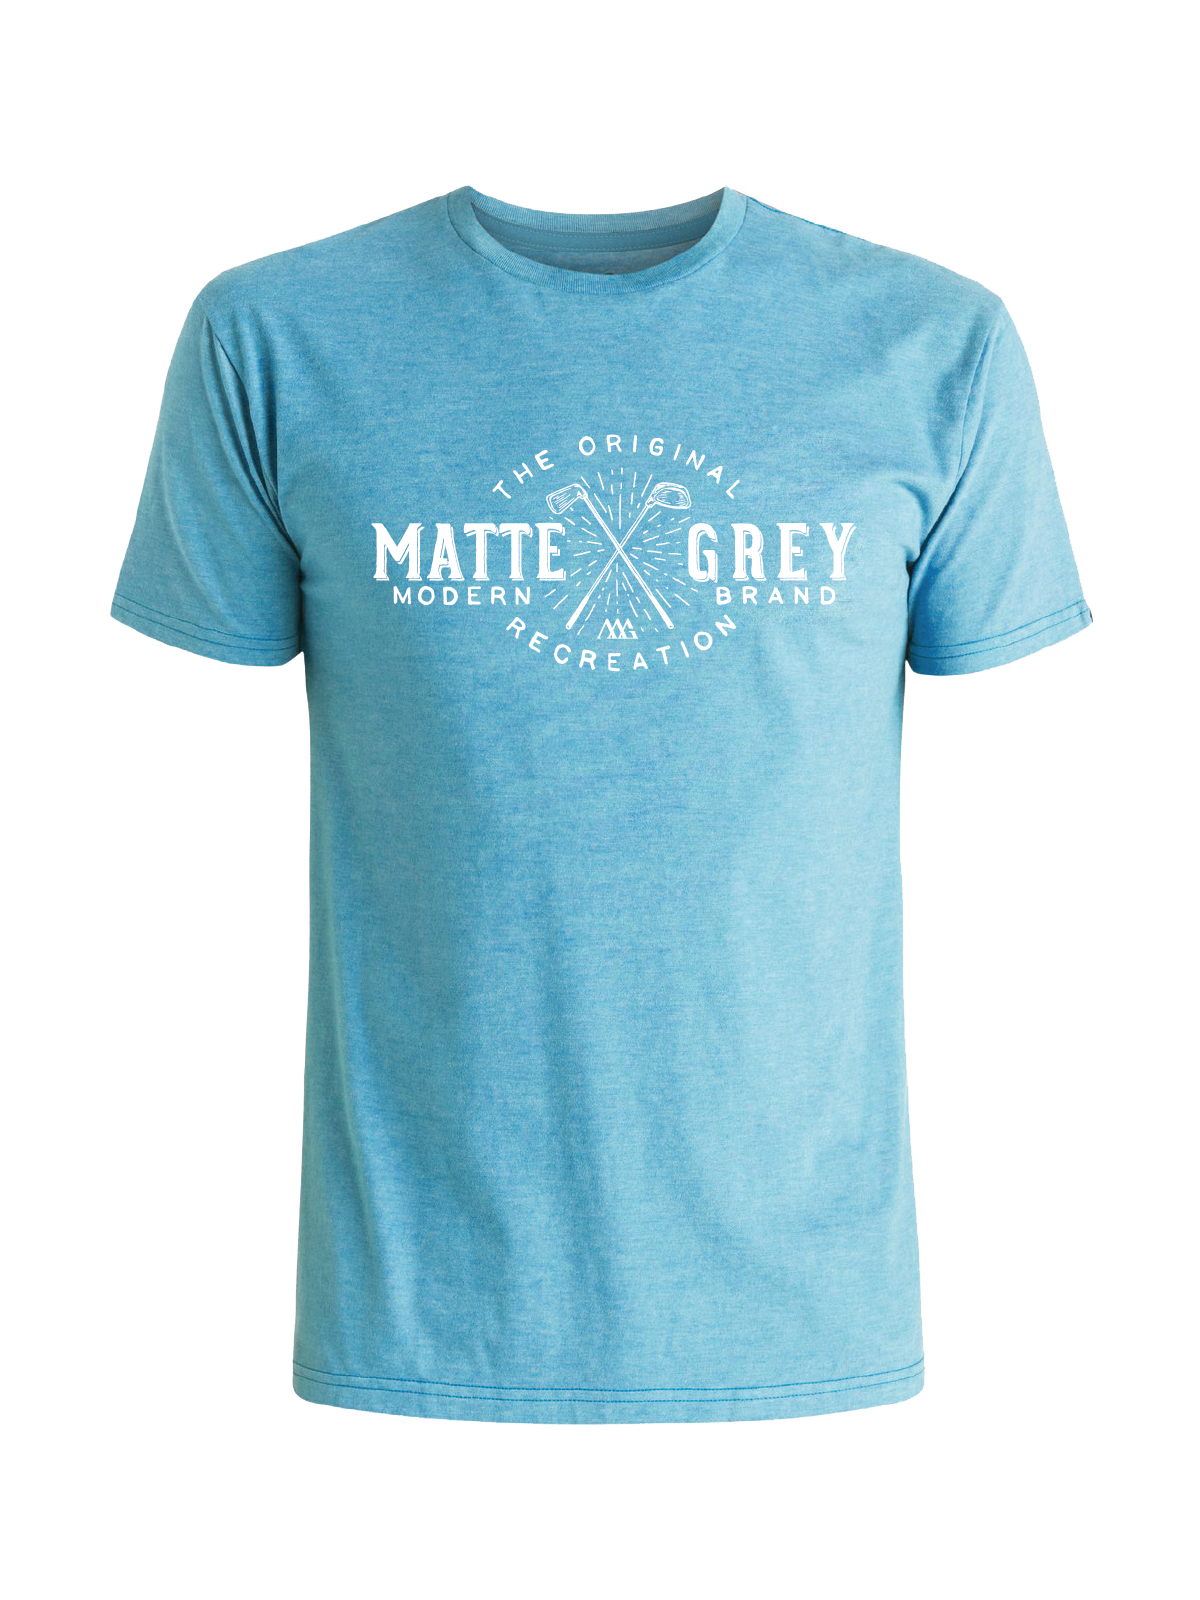 Matte Grey Men's Deus Gainsburo Heather (Smoke) Graphic Tee Shirt ...